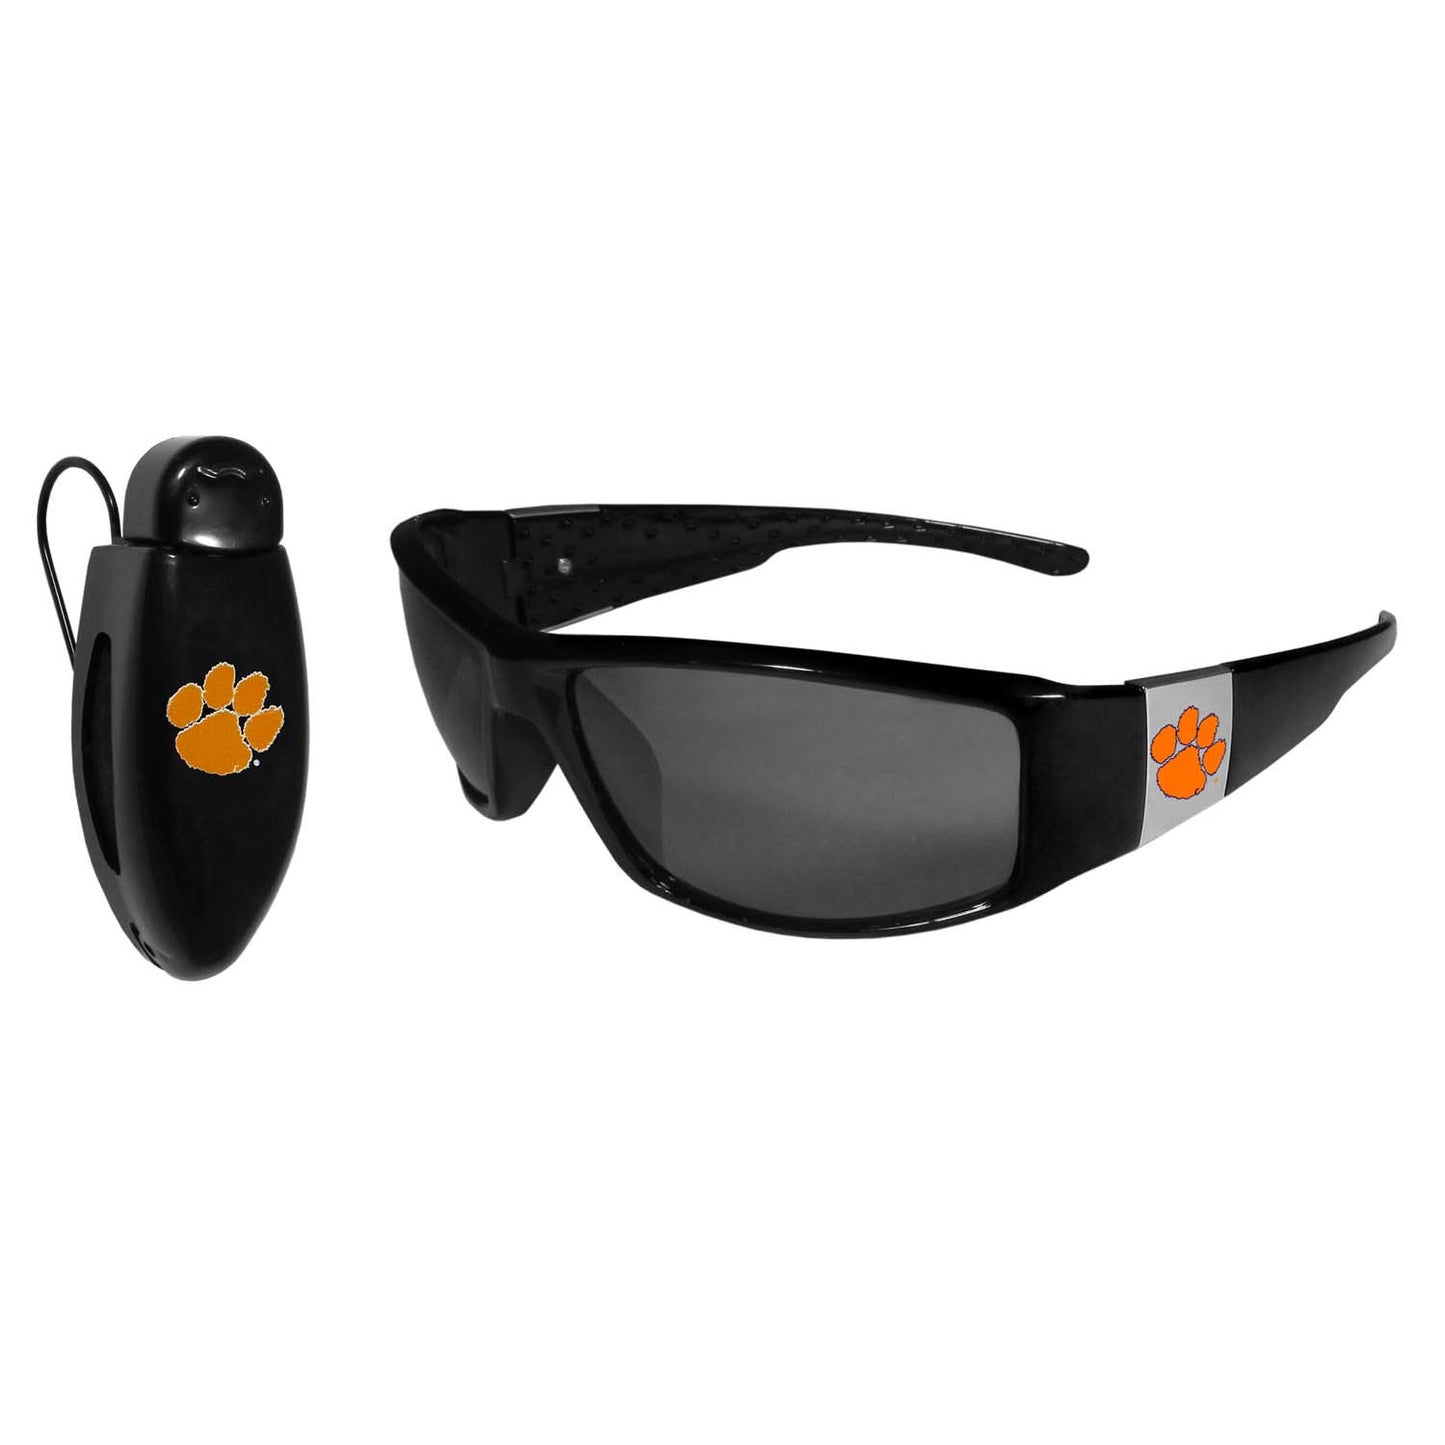 Clemson Tigers NCAA Black Chrome Sunglasses with Visor Clip Bundle - Black